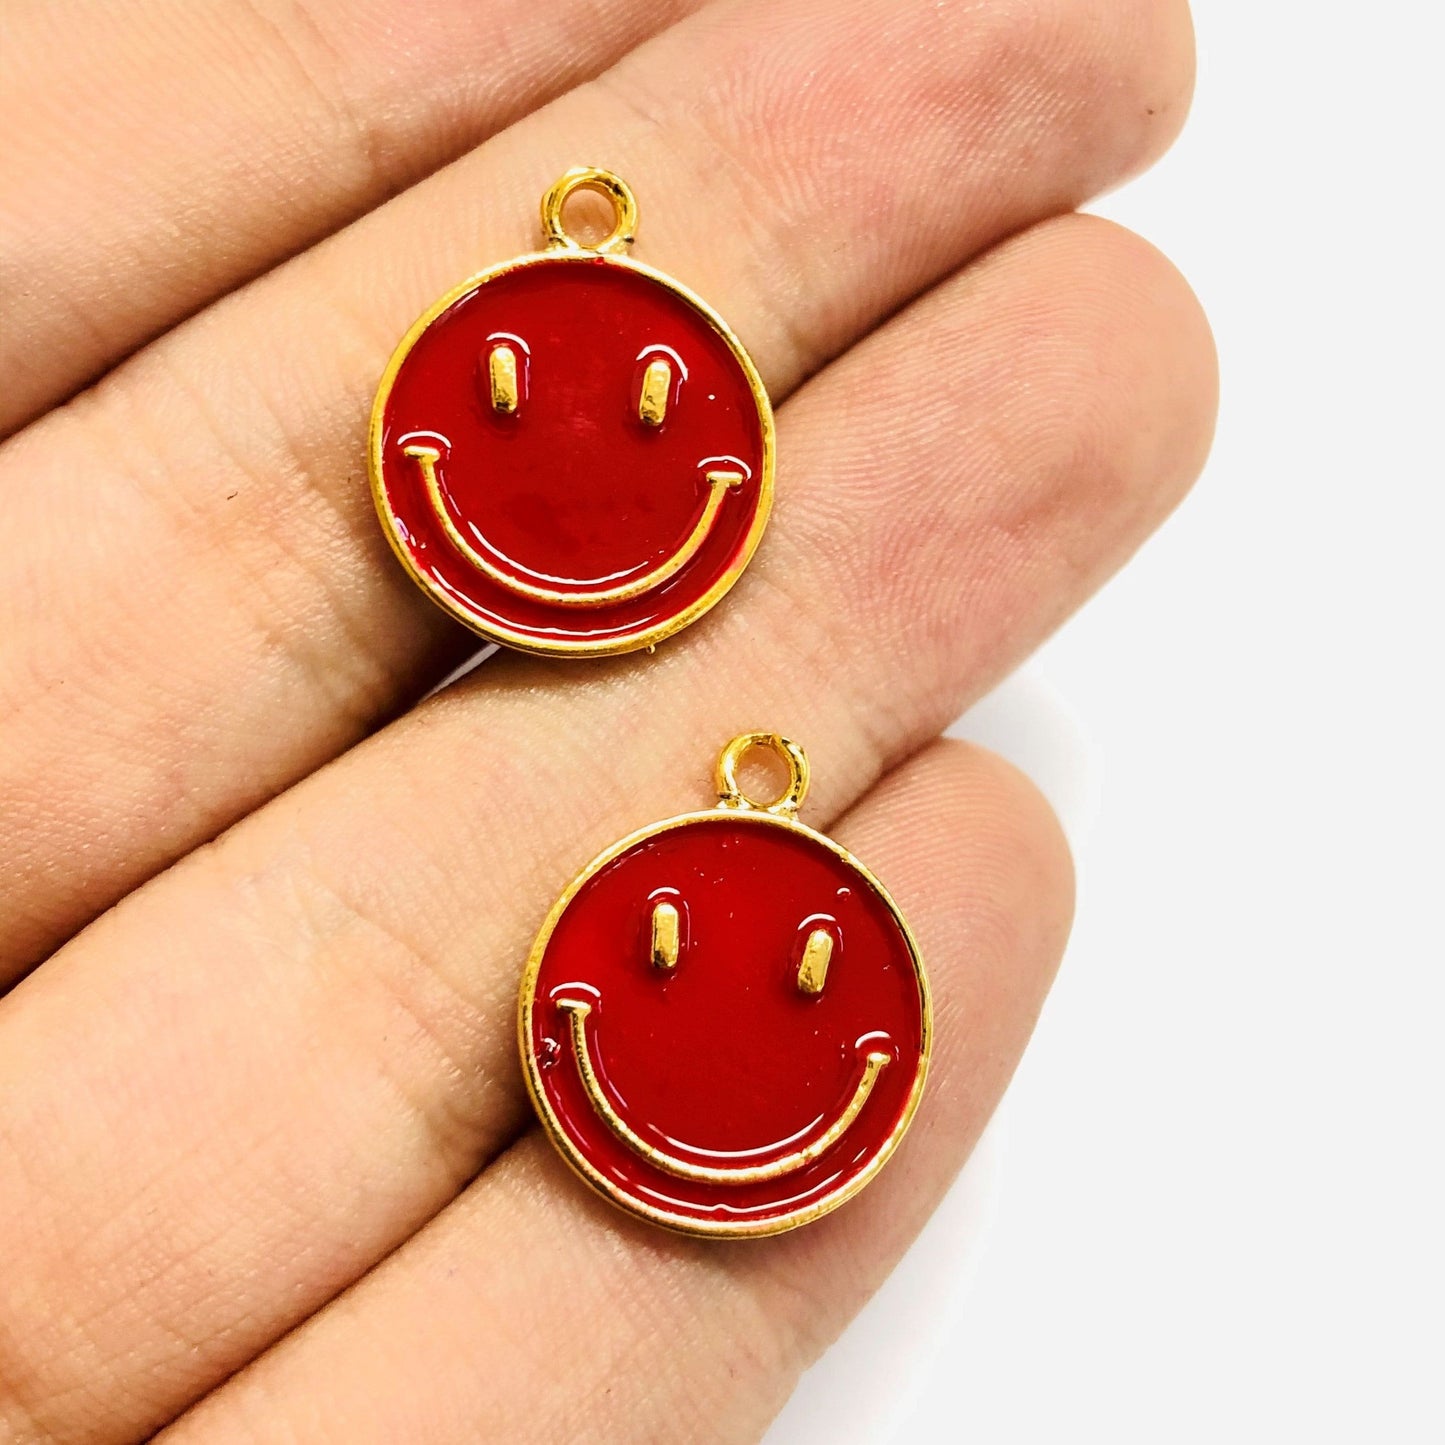 Vergoldetes Emaille-Smiley-Gesicht – dunkelrot